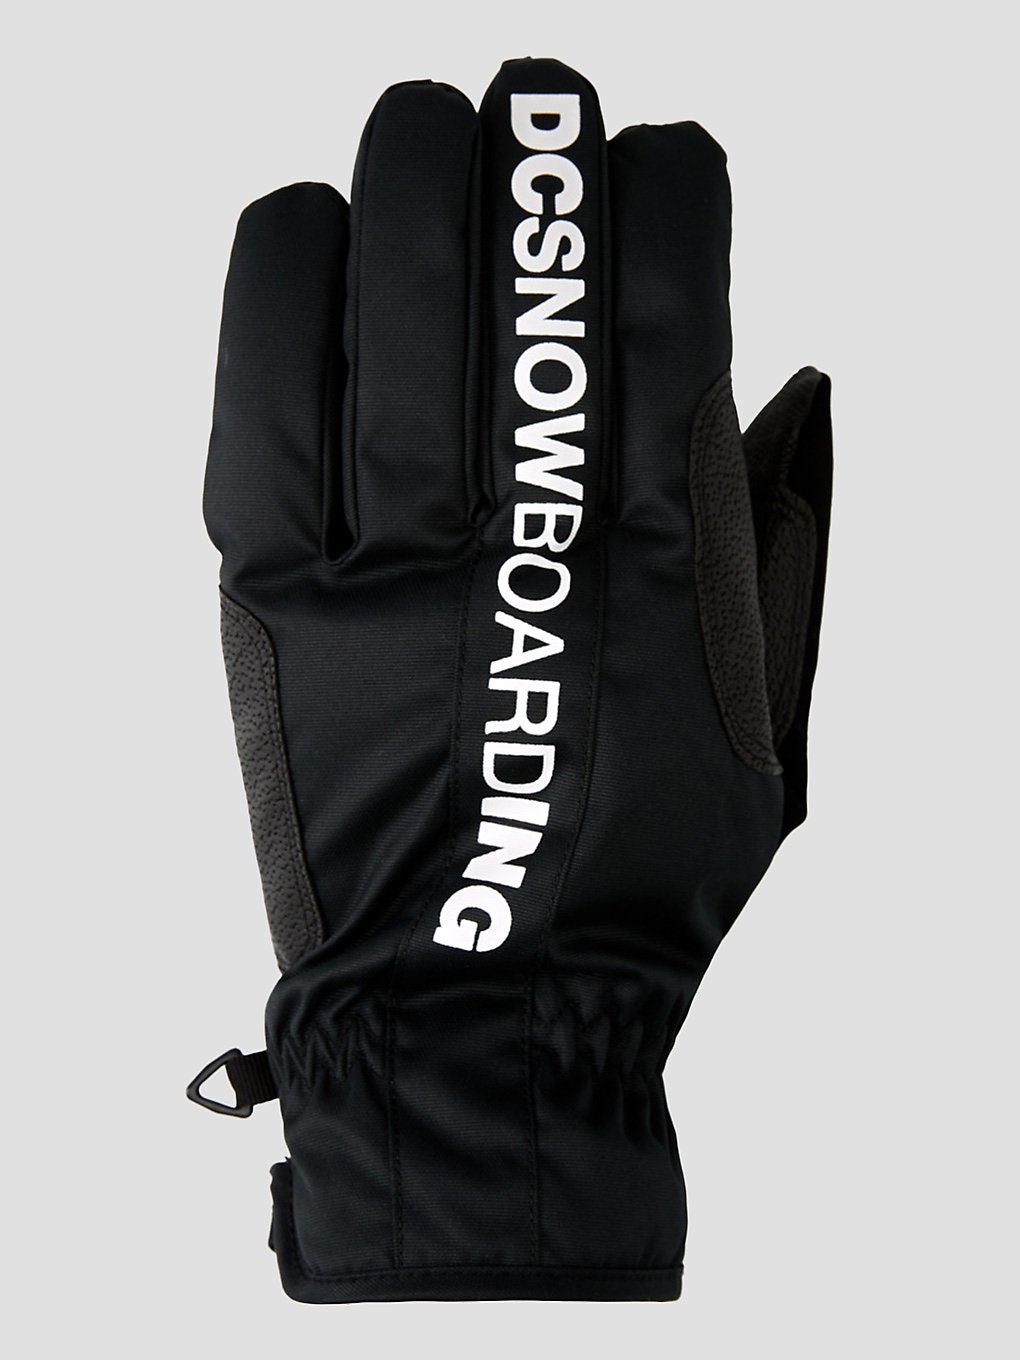 DC Salute Handschuhe black kaufen